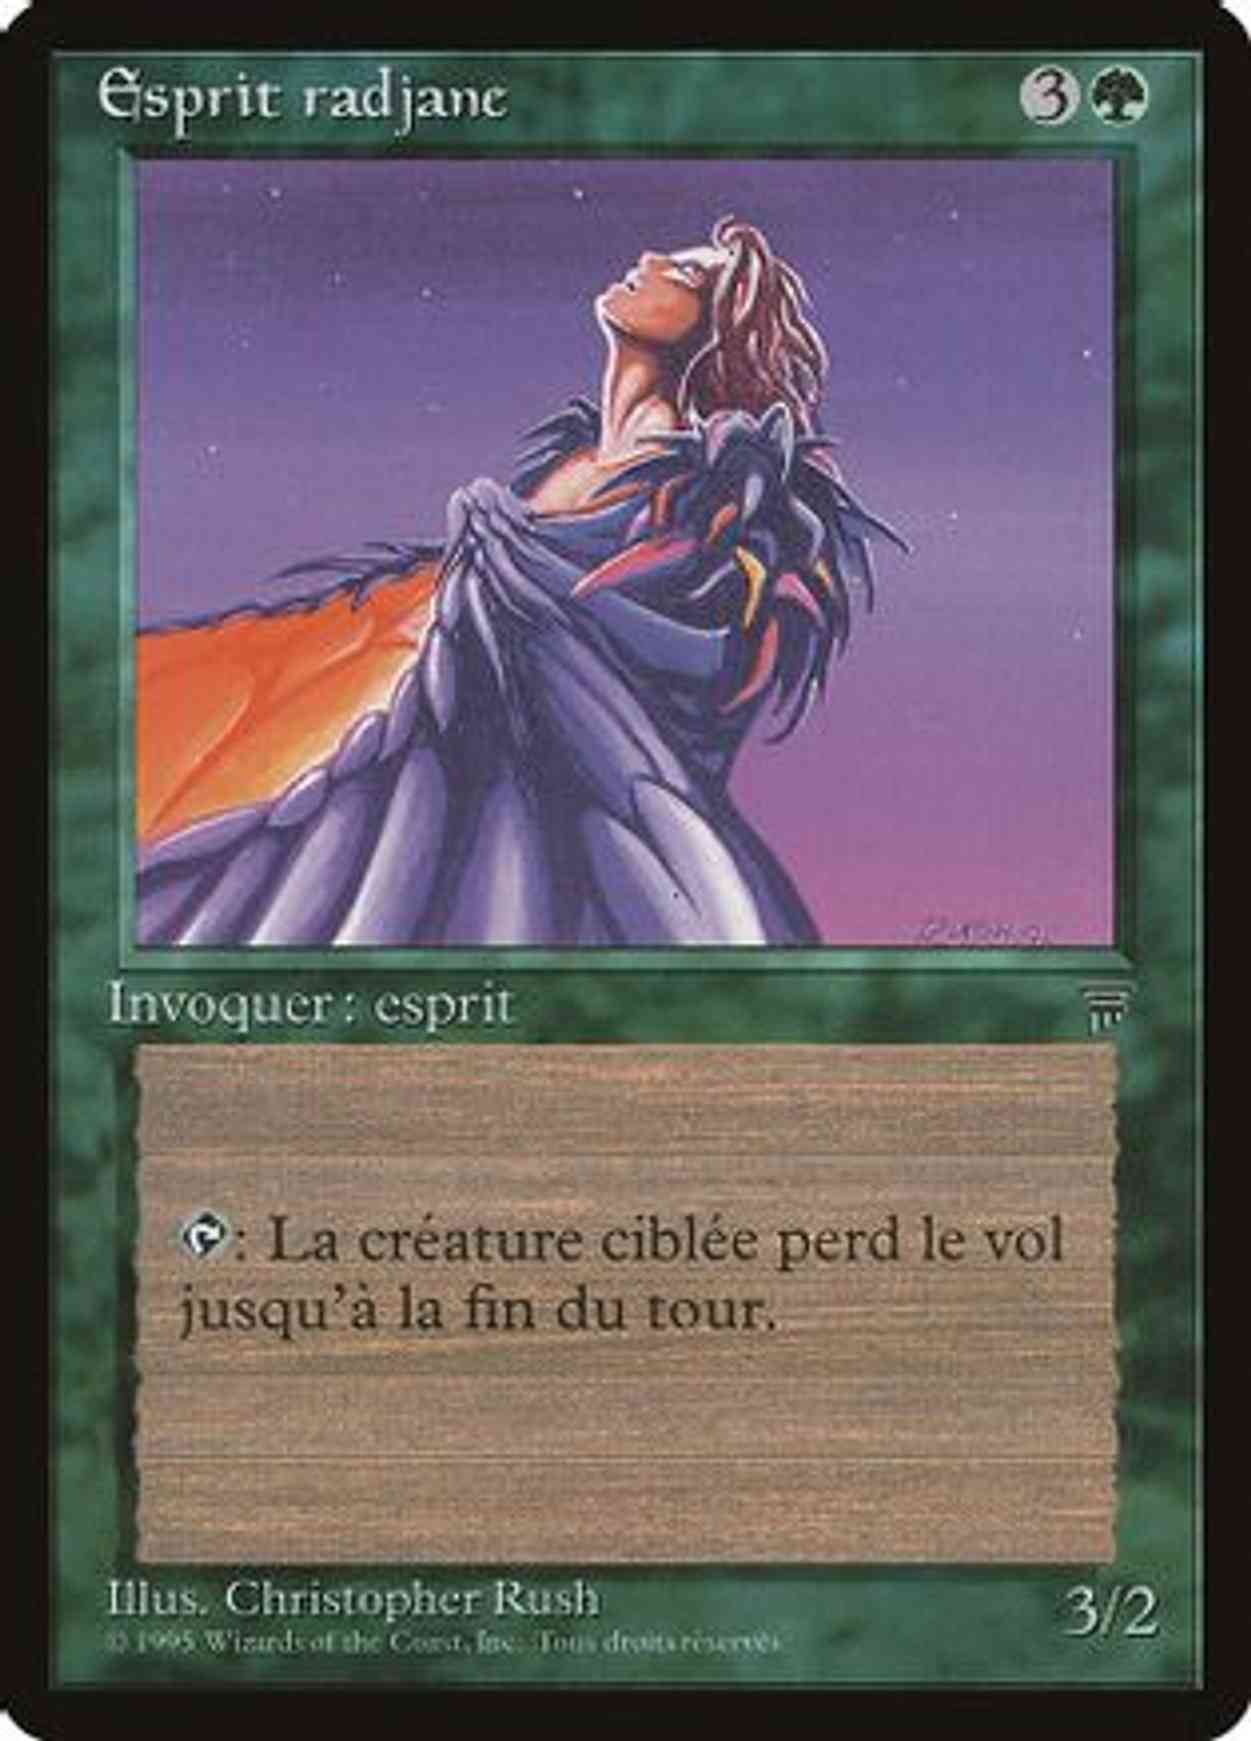 Radjan Spirit (French) - "Esprit radjane" magic card front